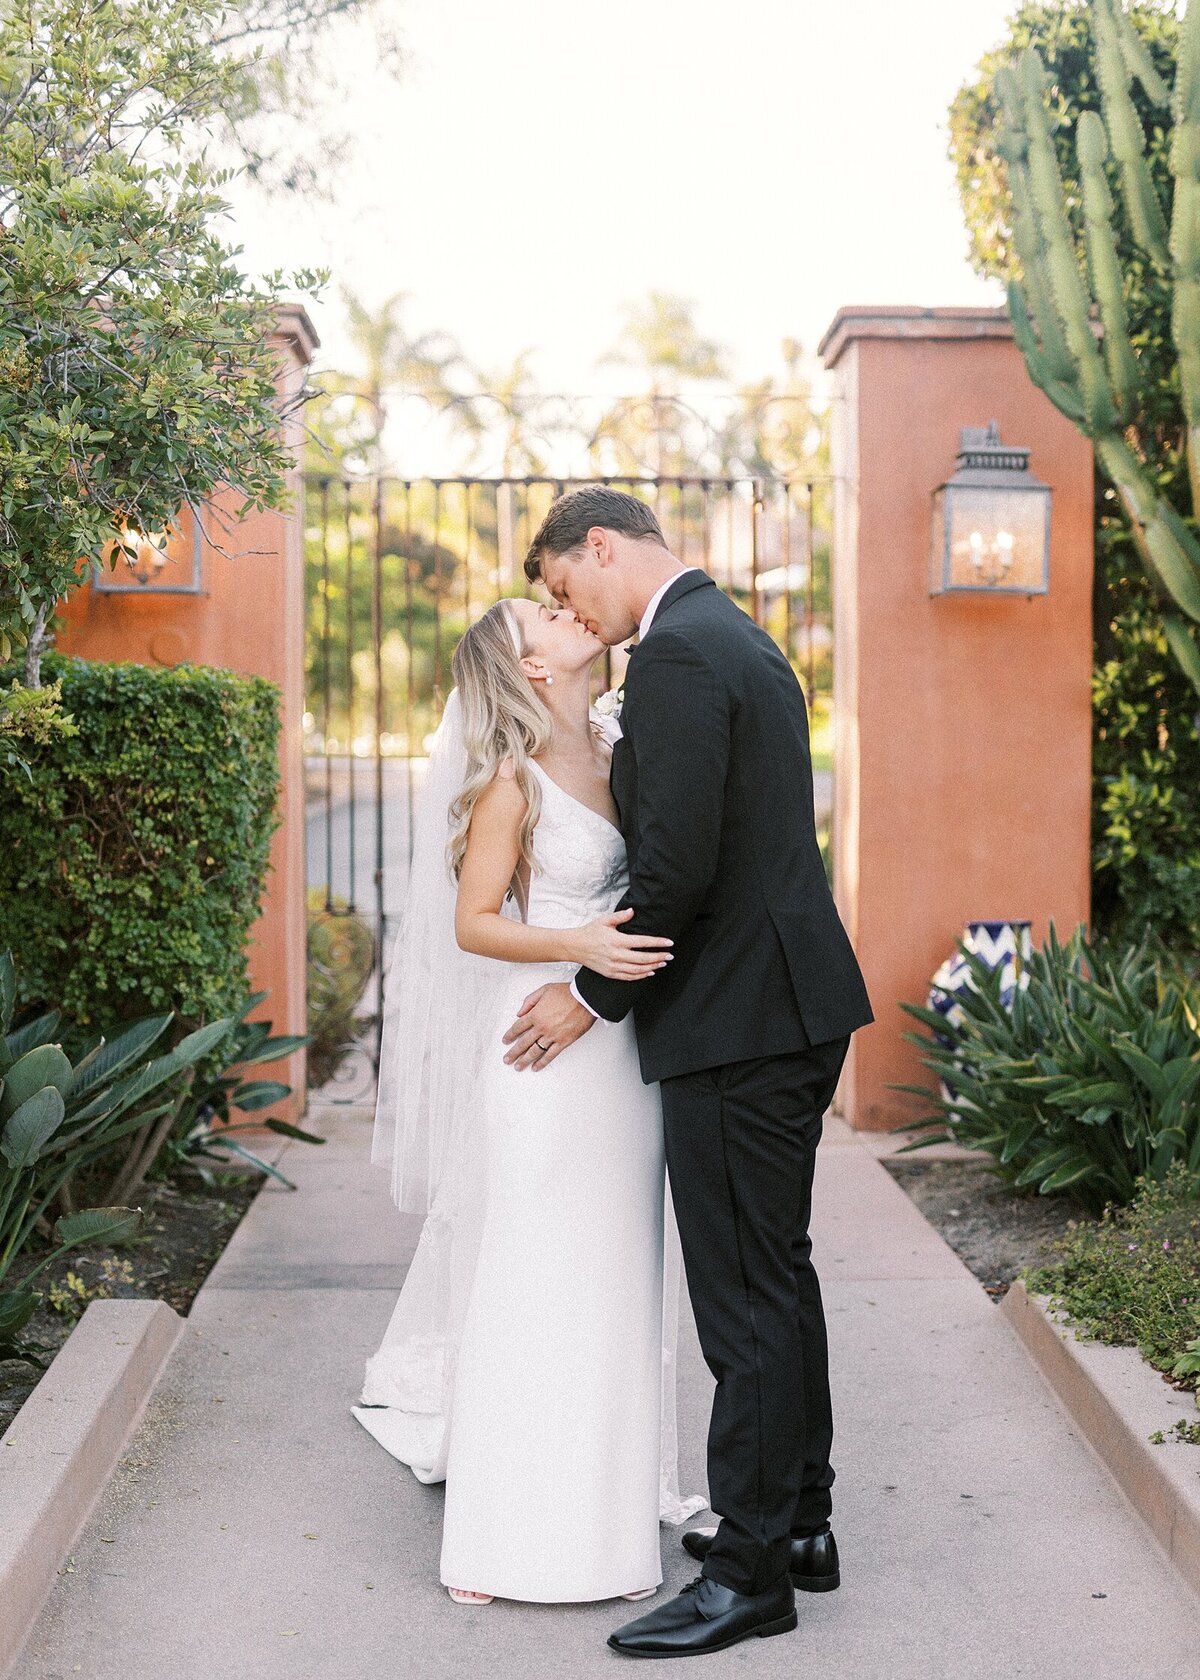 Sky blue, black tie wedding at Rancho Valencia Resort and Spa by Lisa Riley Photography based in Ranch Bernardo, California.